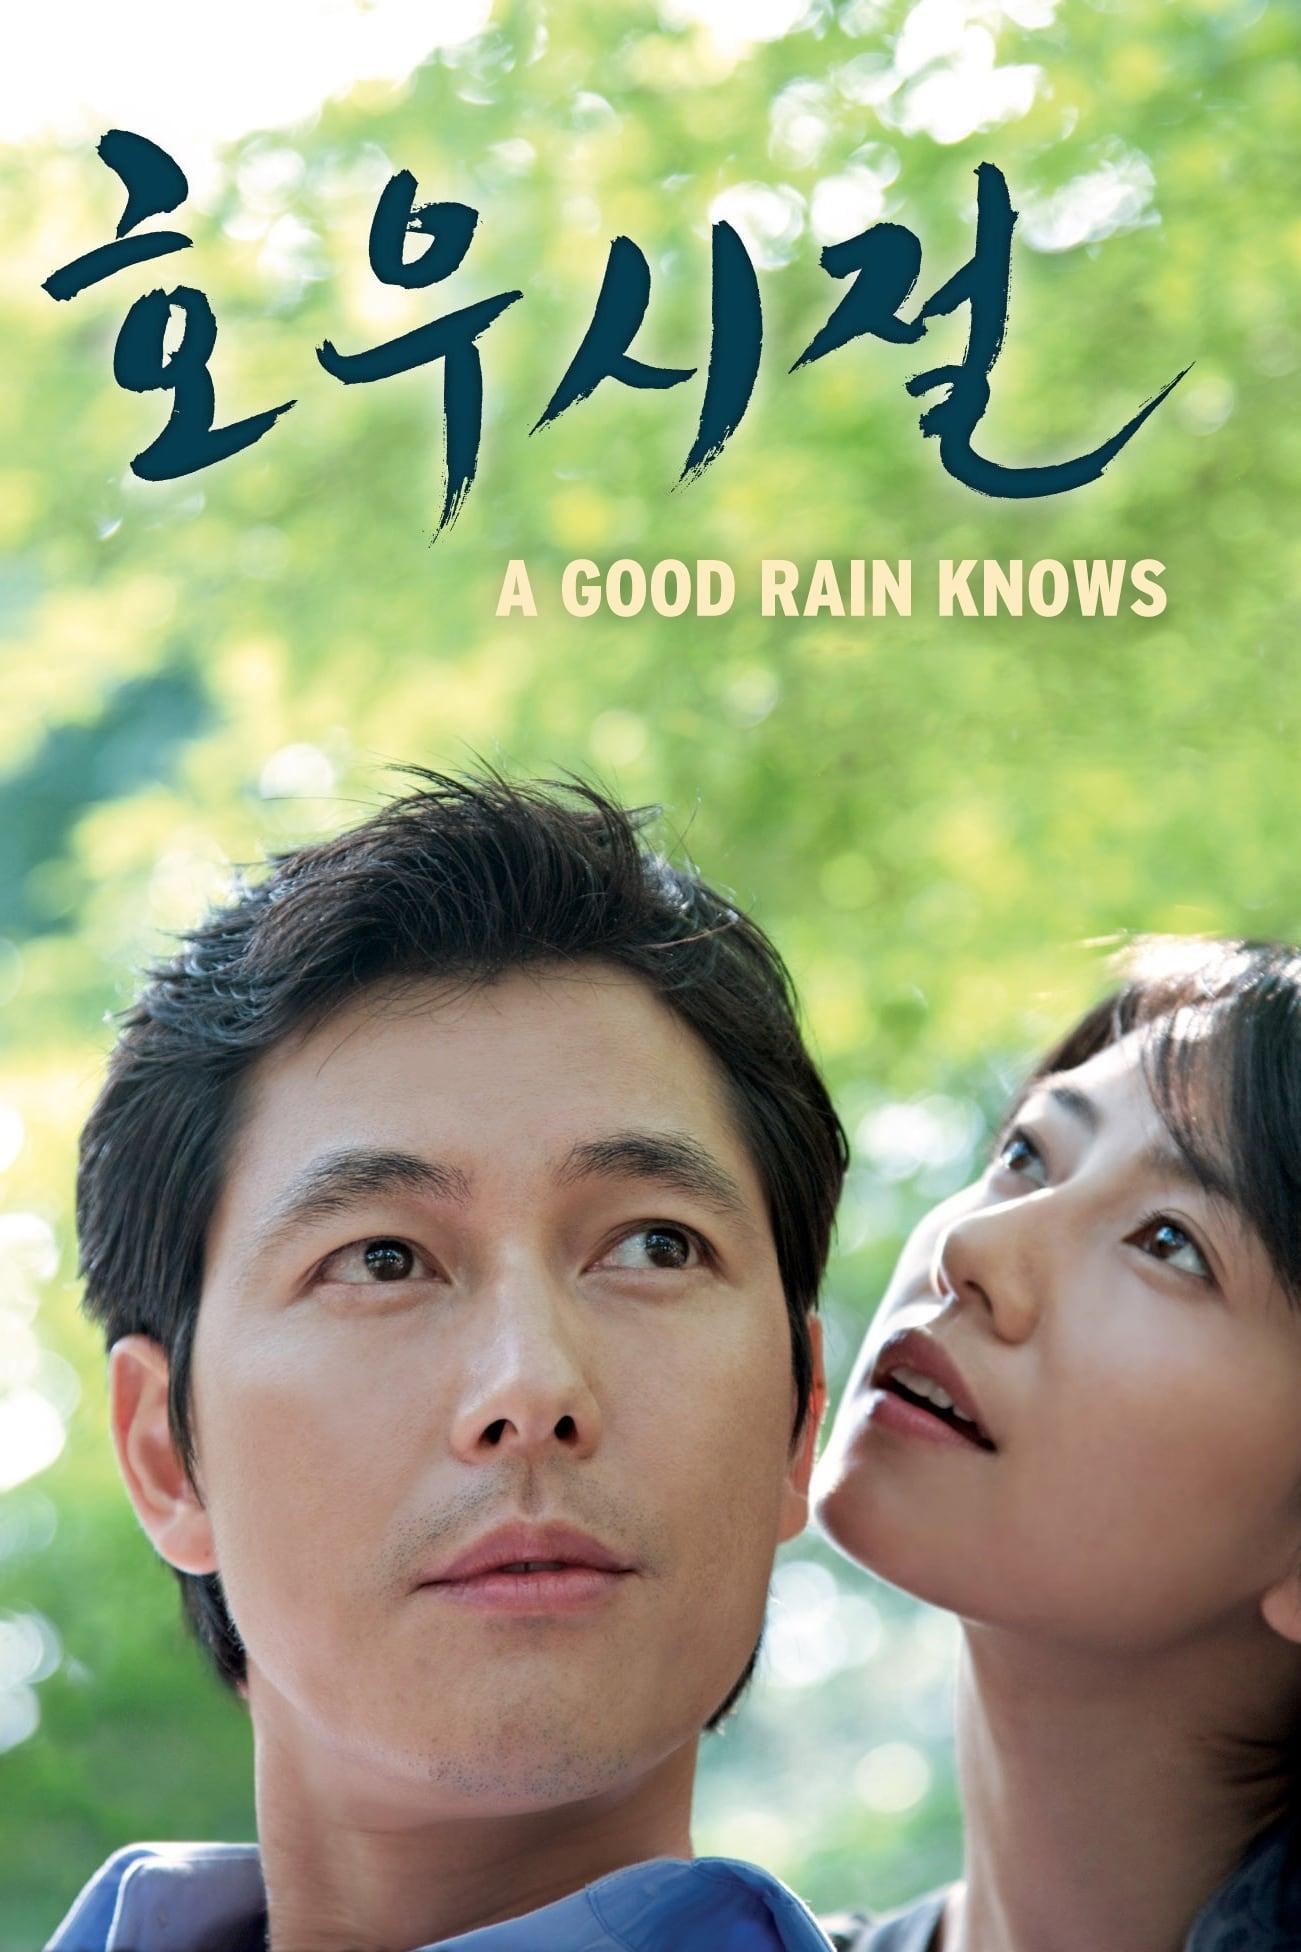 A Season of Good Rain poster